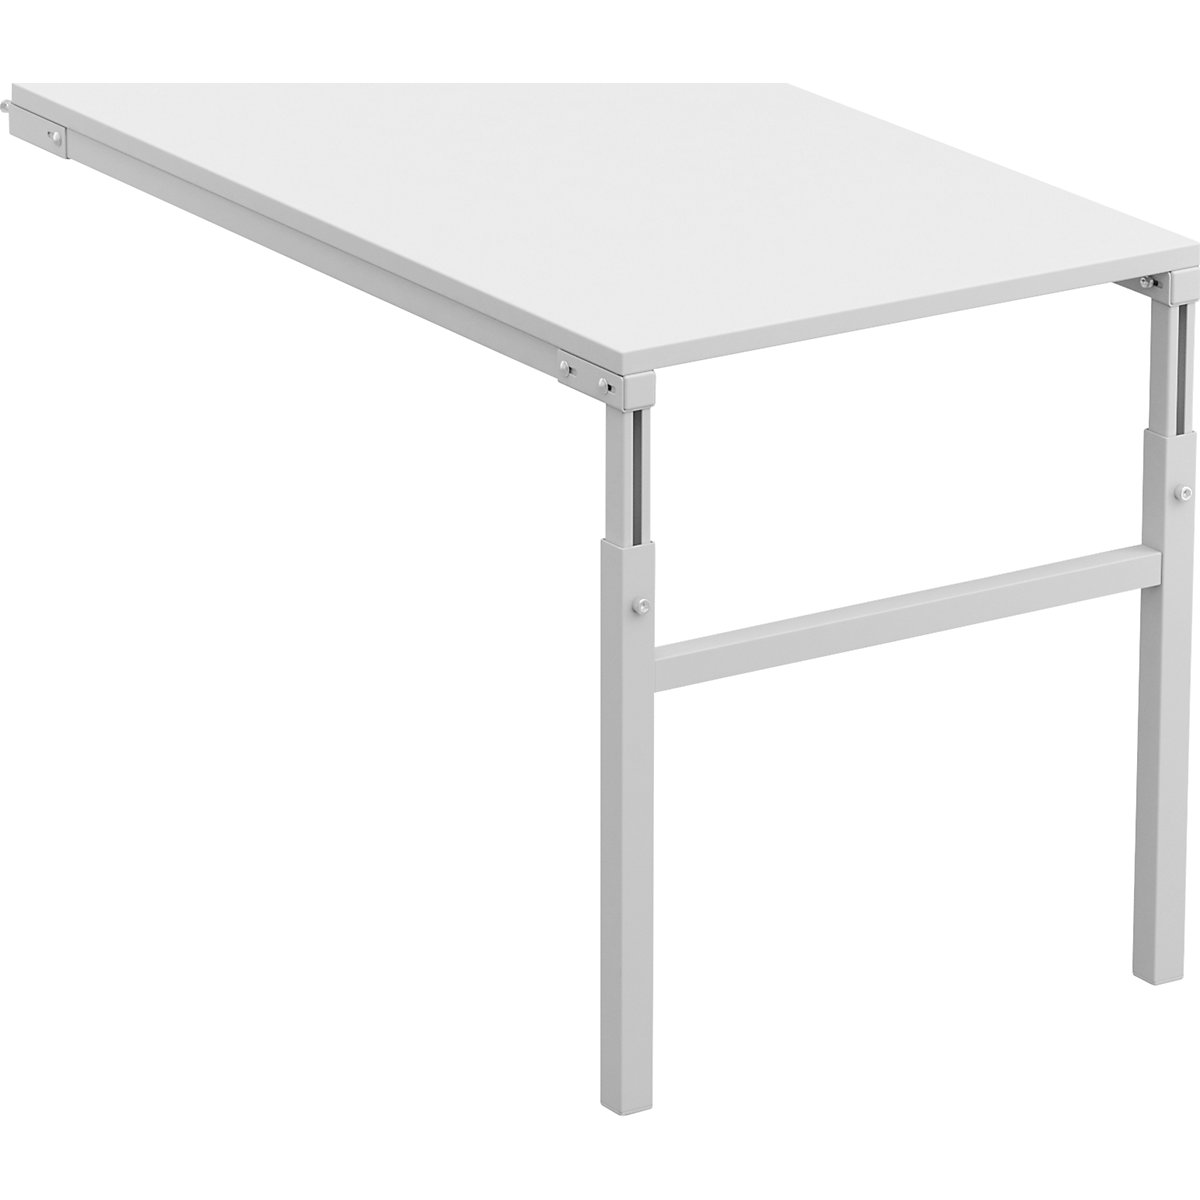 Corner combination add-on table - Treston